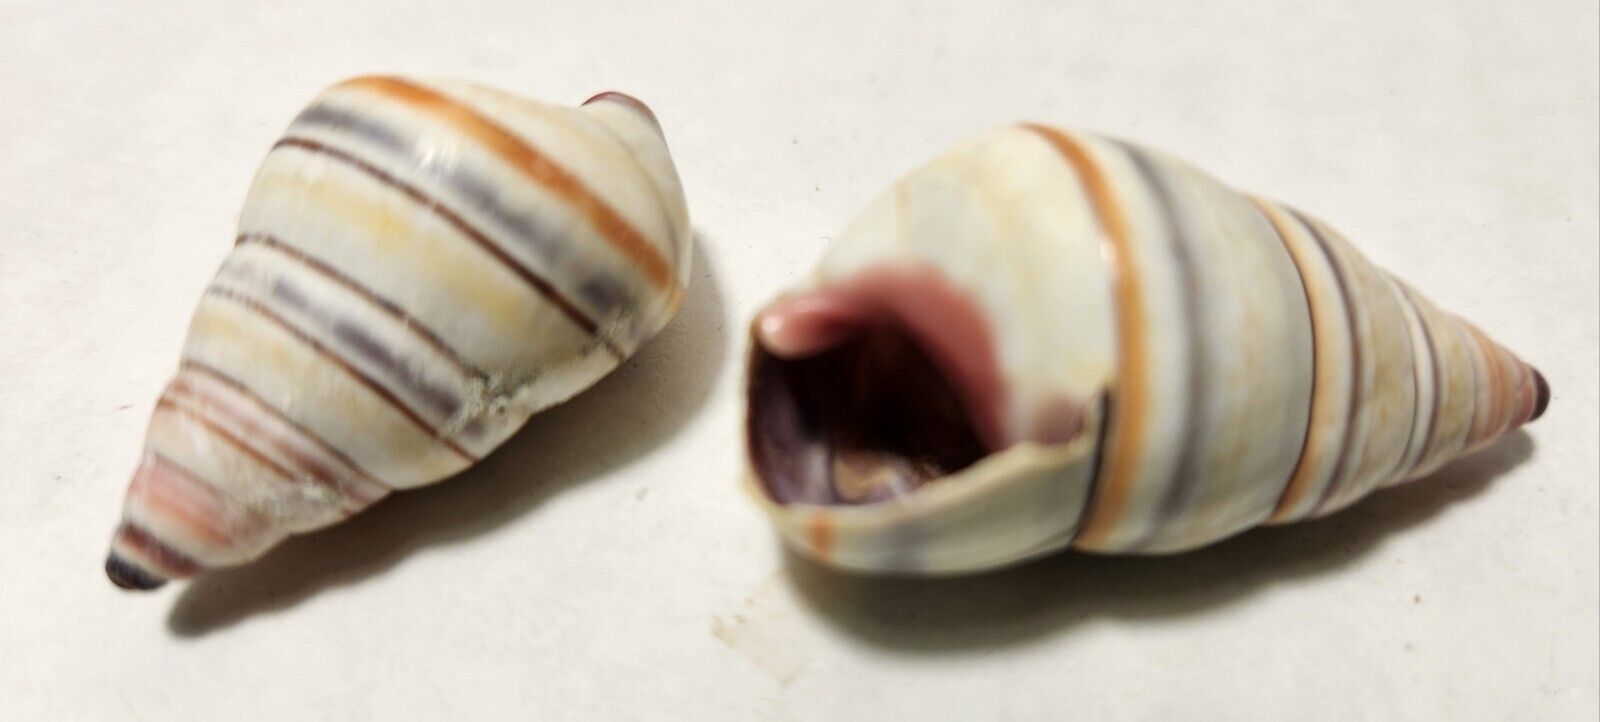 2 Hatian Tree Snail Shells (antipathogenic, antioxidant, skin healing) 0.006 gm